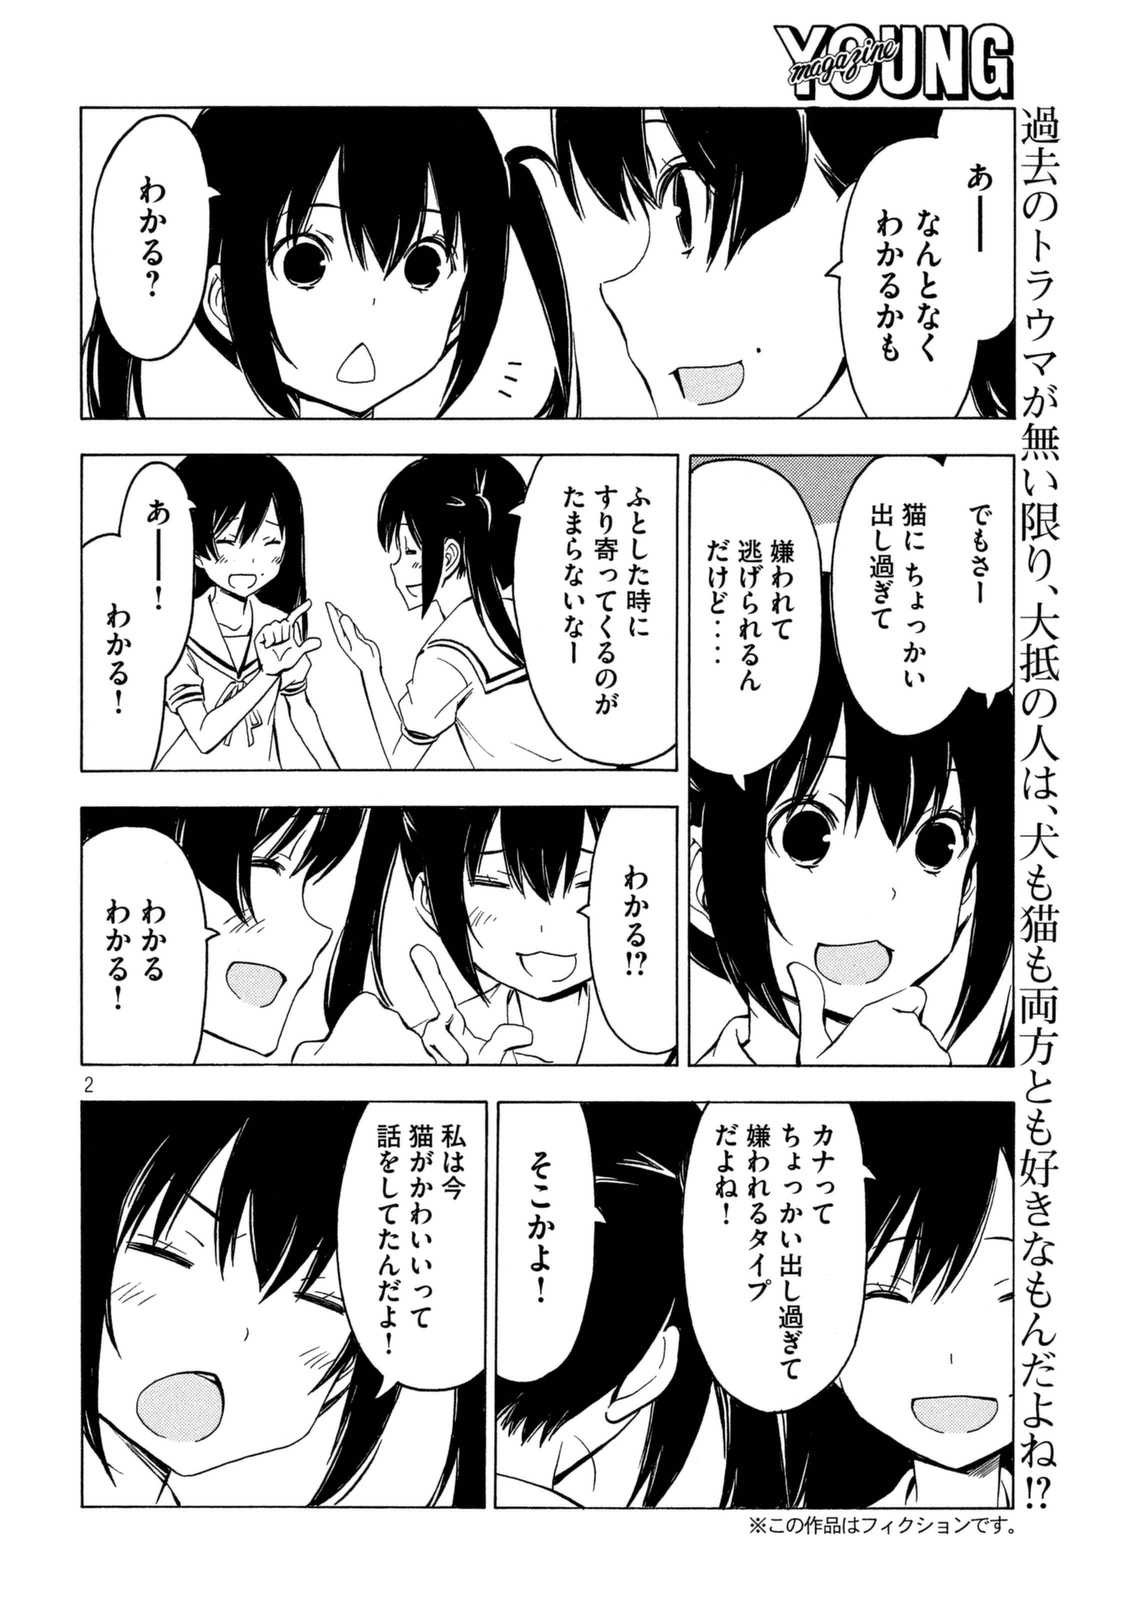 Minami-ke - Chapter 277 - Page 2